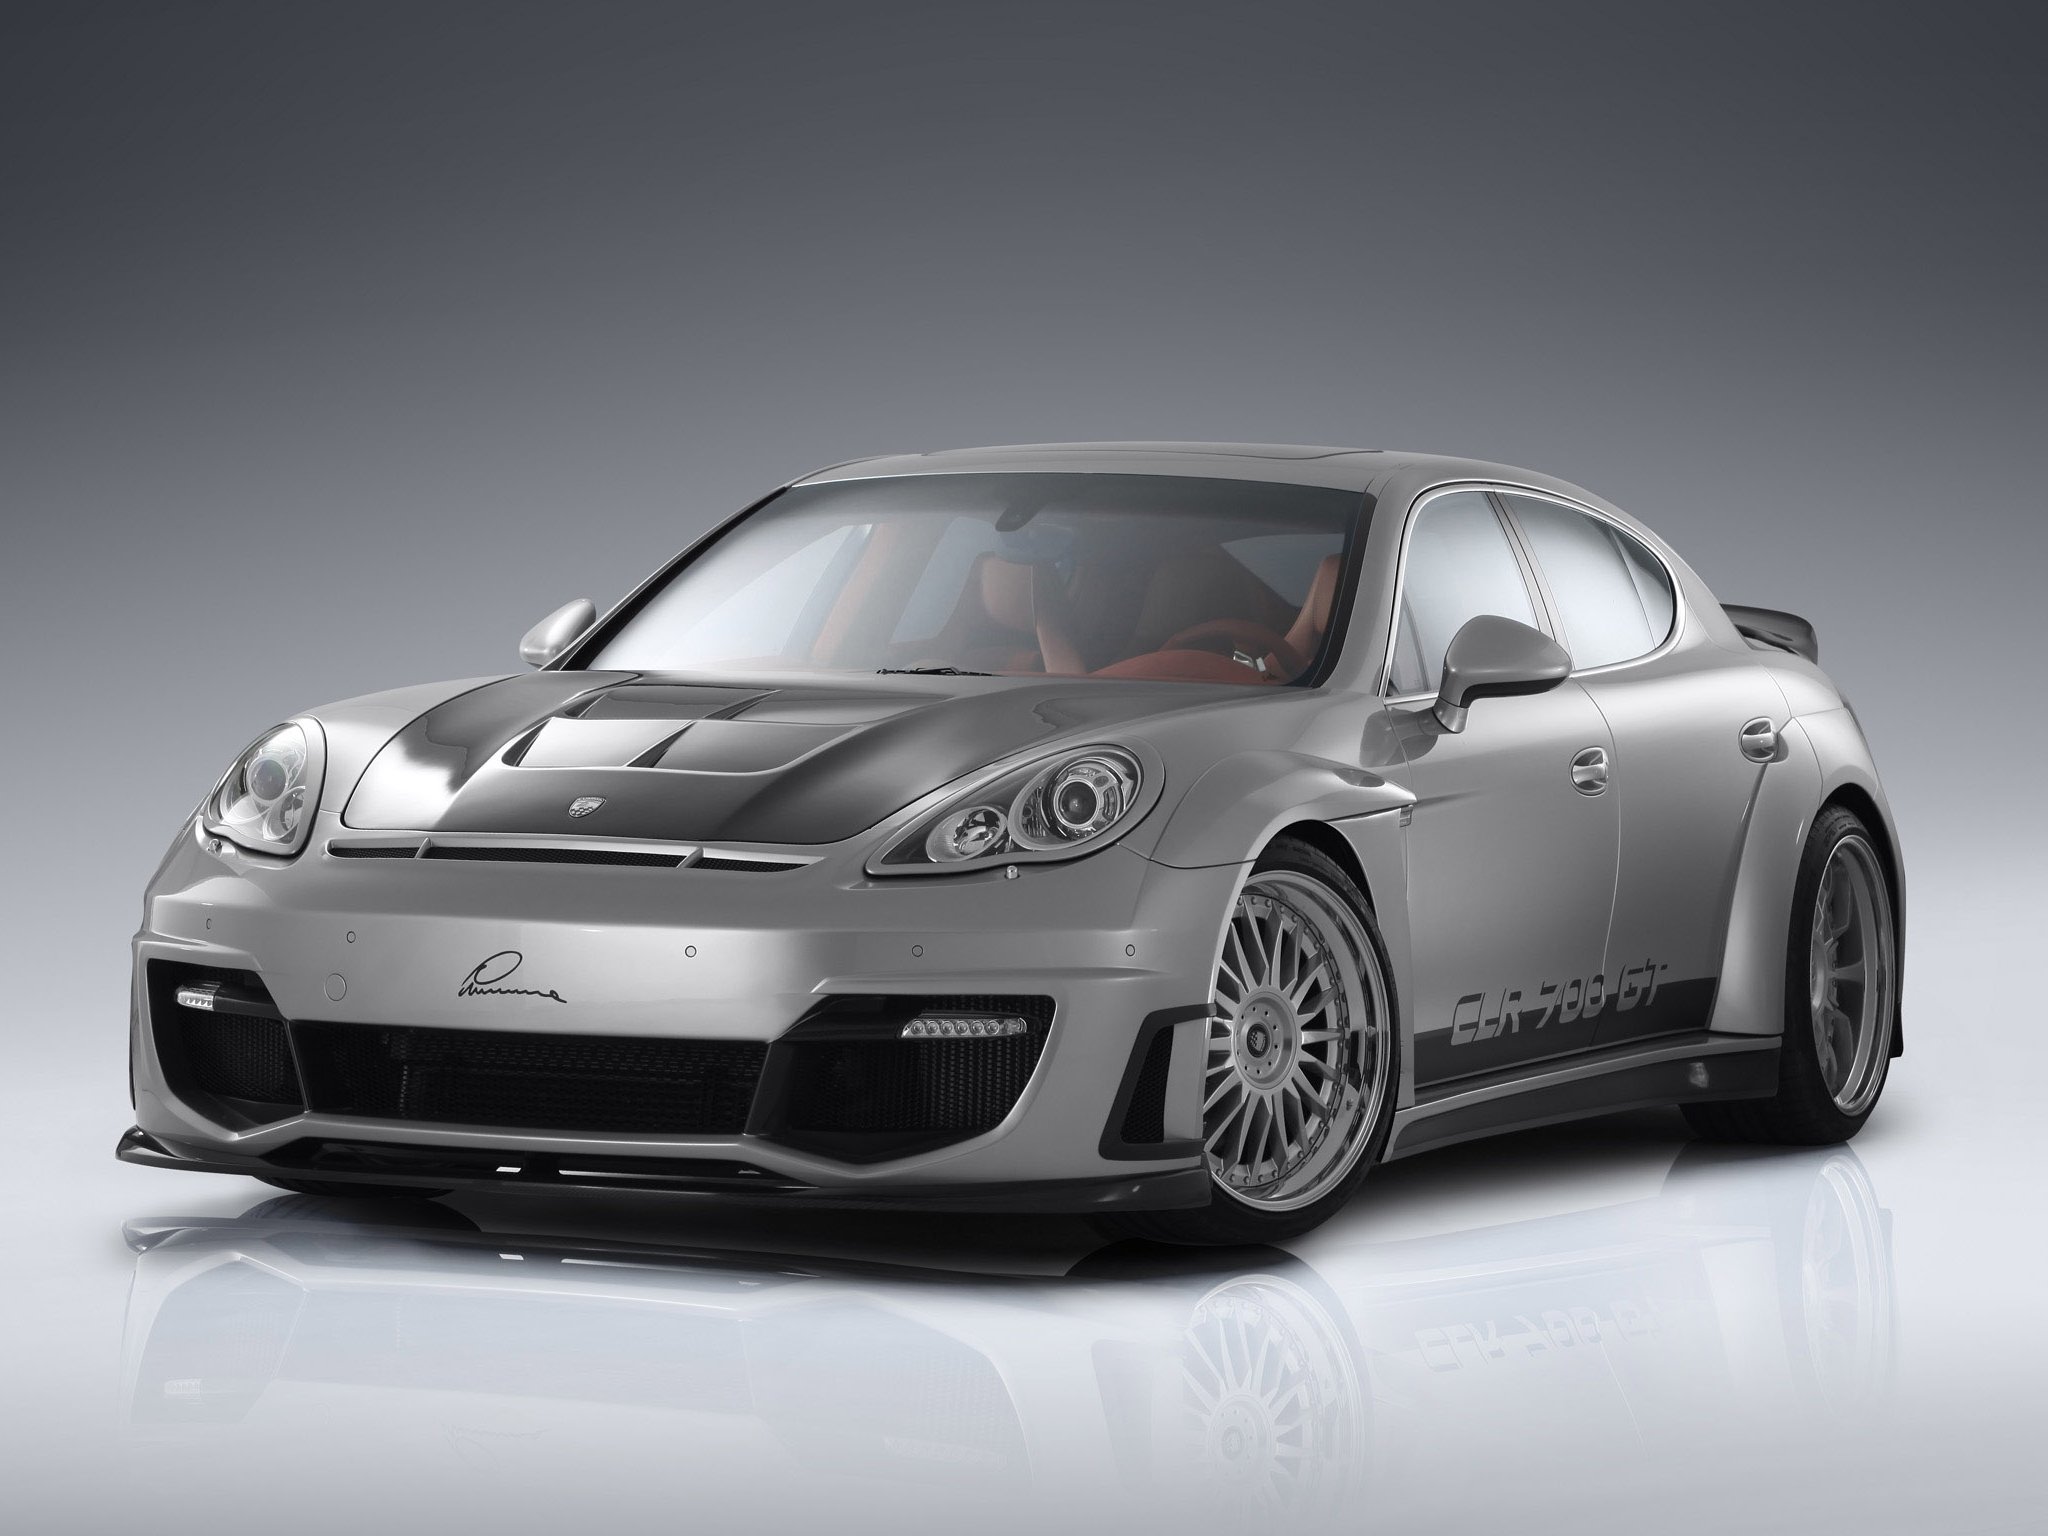 lumma, Design, Porsche, Panamera, Clr, 700 gt,  970 , 2010, Cars, Modifie Wallpaper